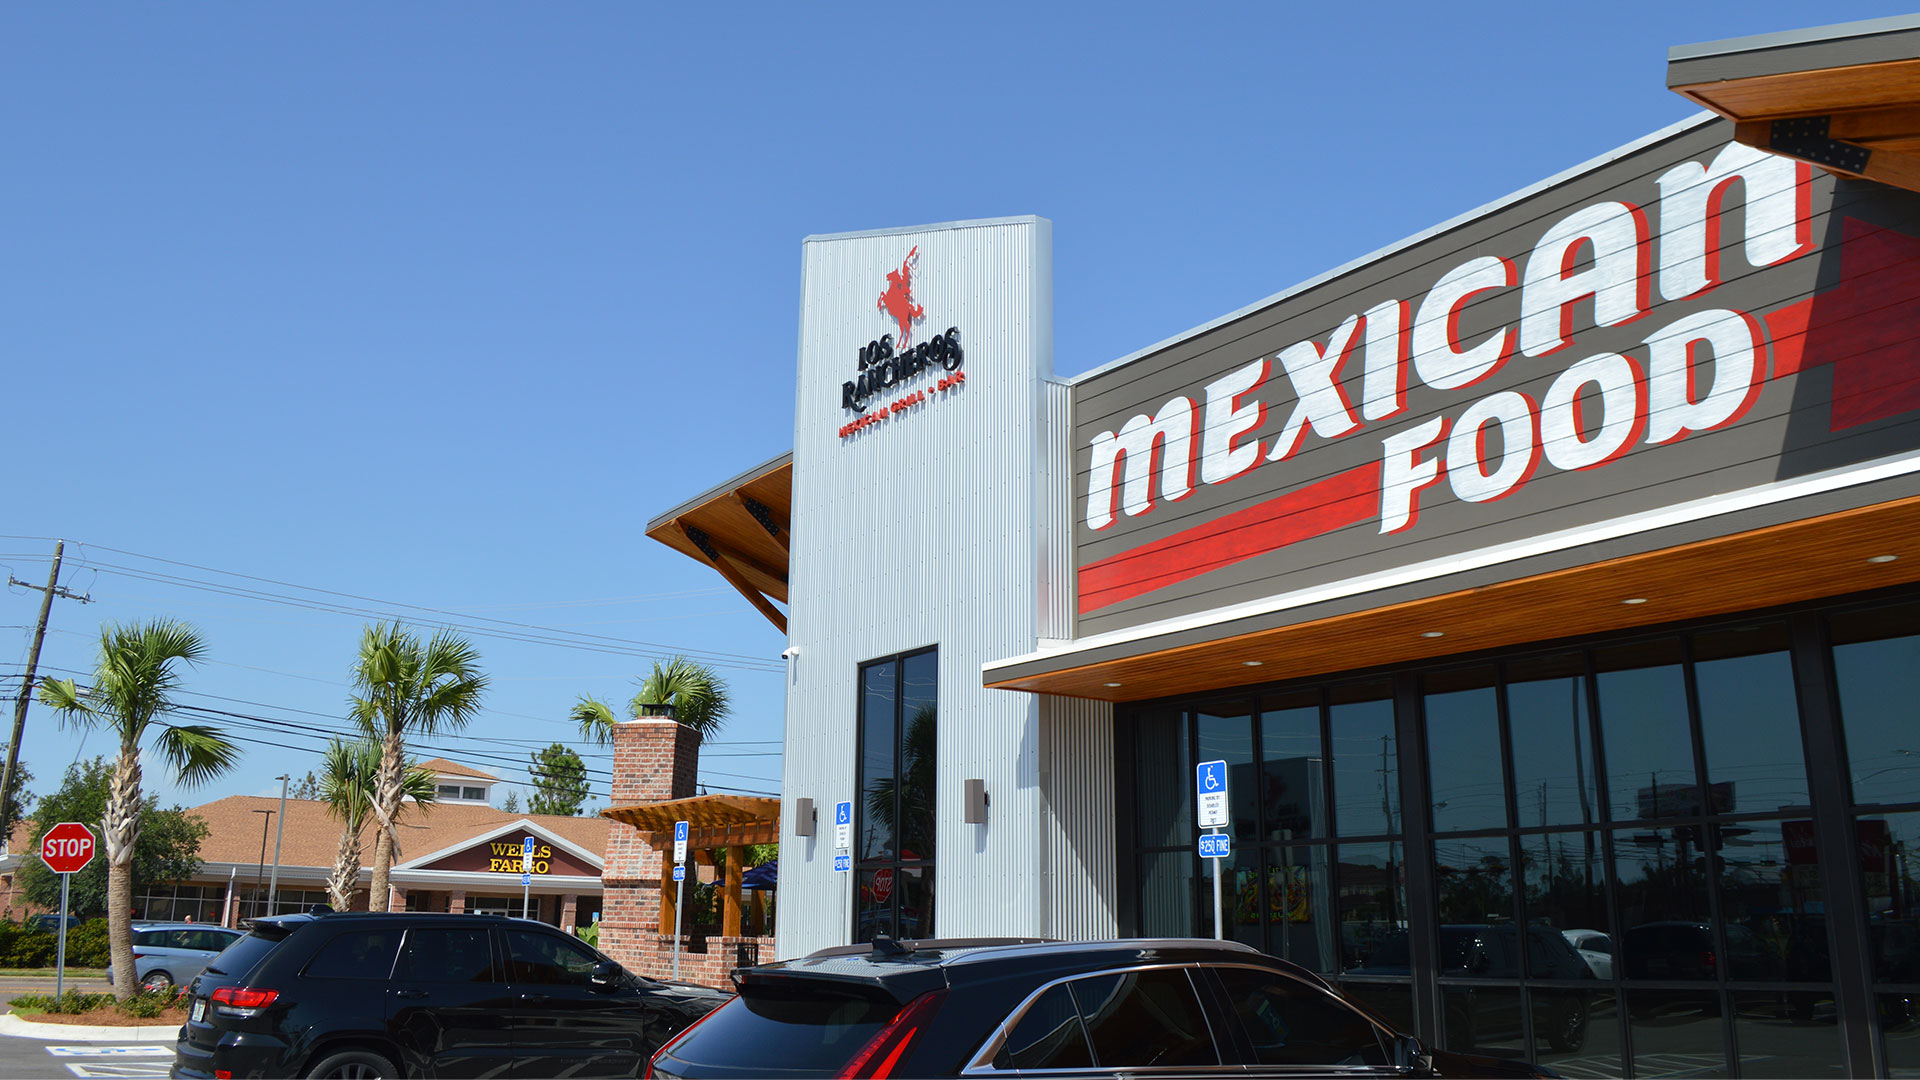 Mexican Food new location 23rd street Panama City, Florida | Los Rancheros Mexican Grill + Bar